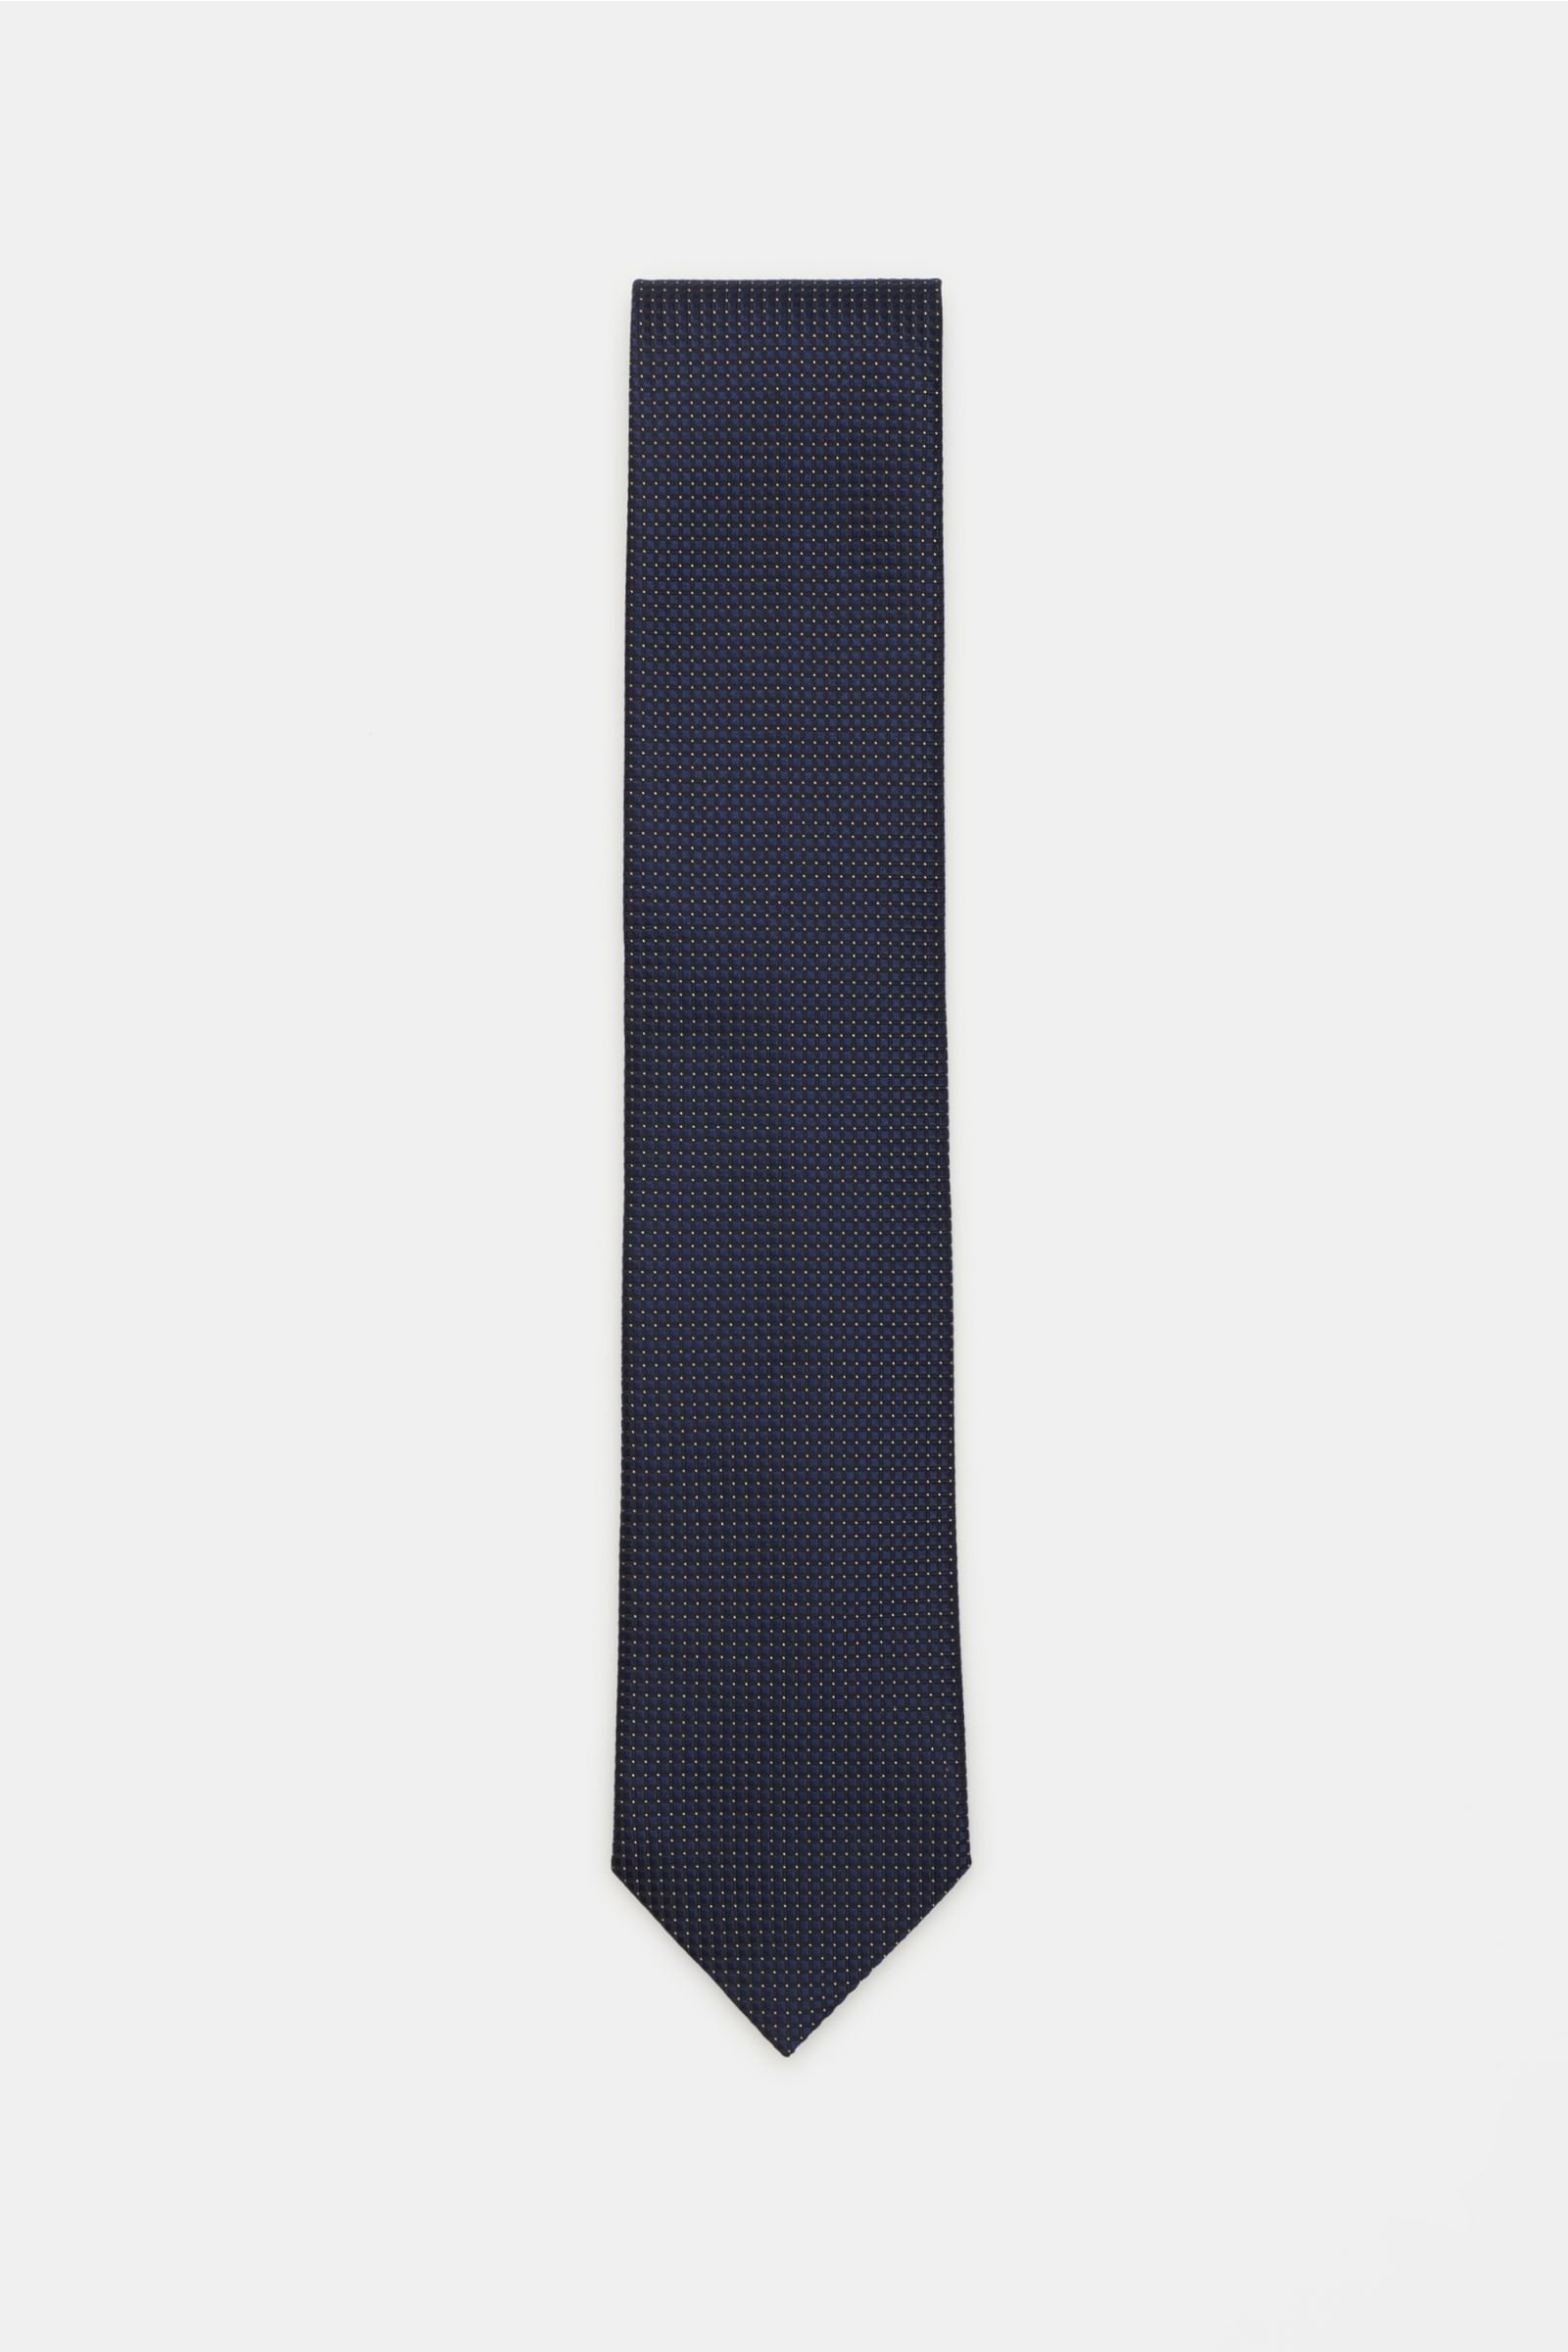 Silk tie navy check pattern